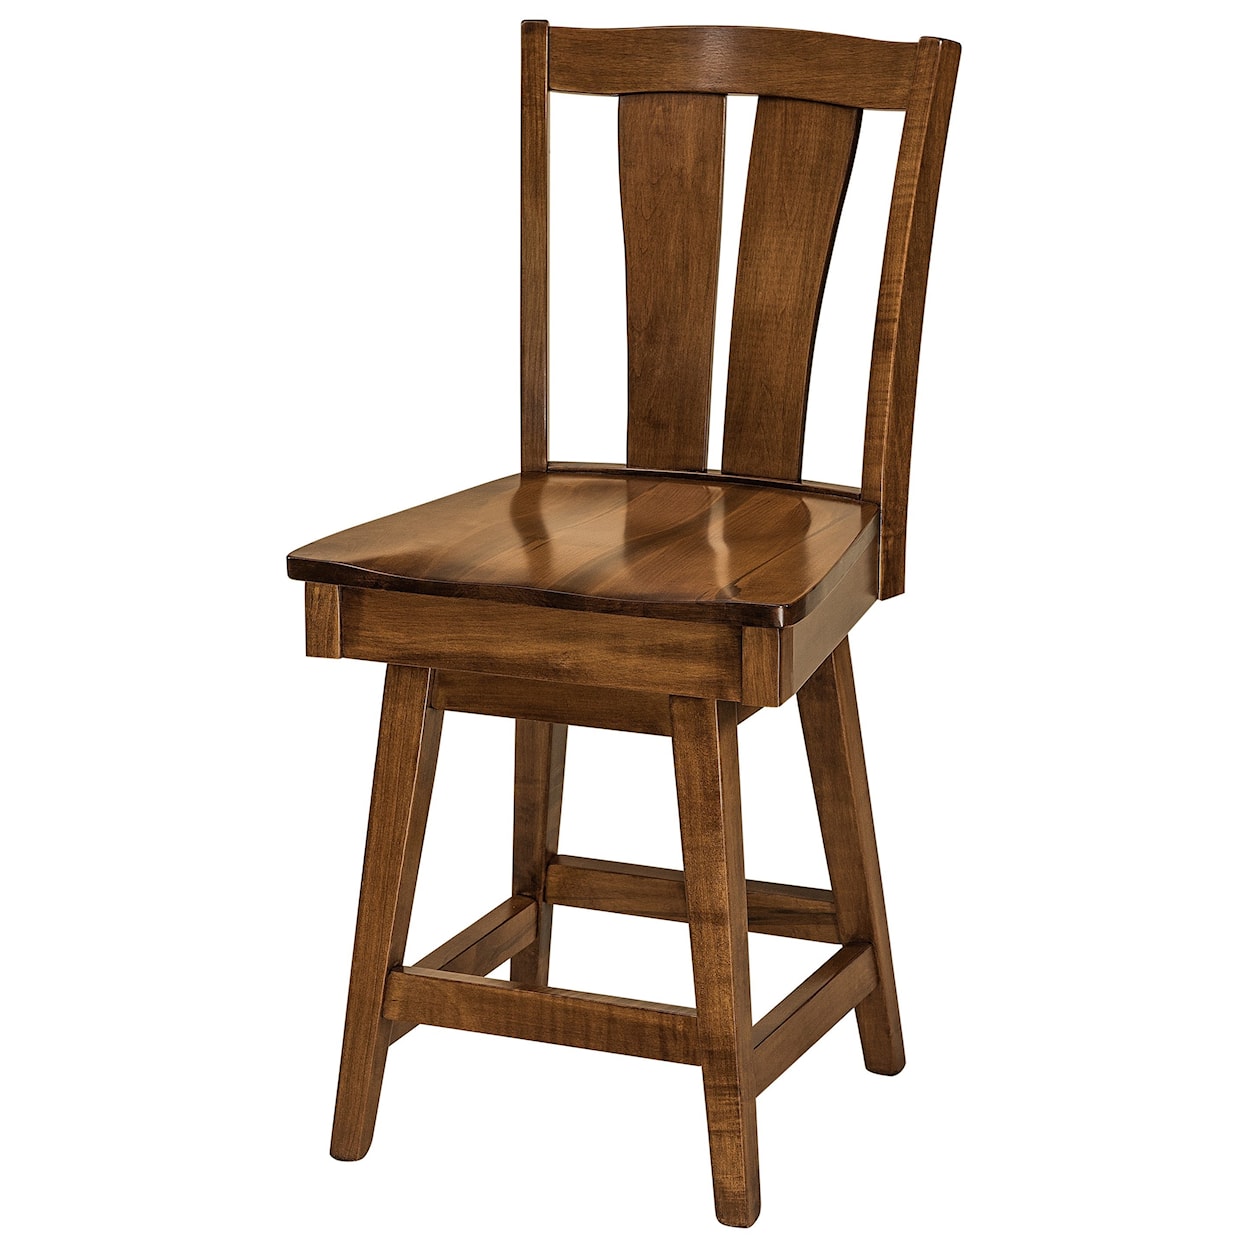 F&N Woodworking Brawley Swivel Bar Stool - Fabric Seat